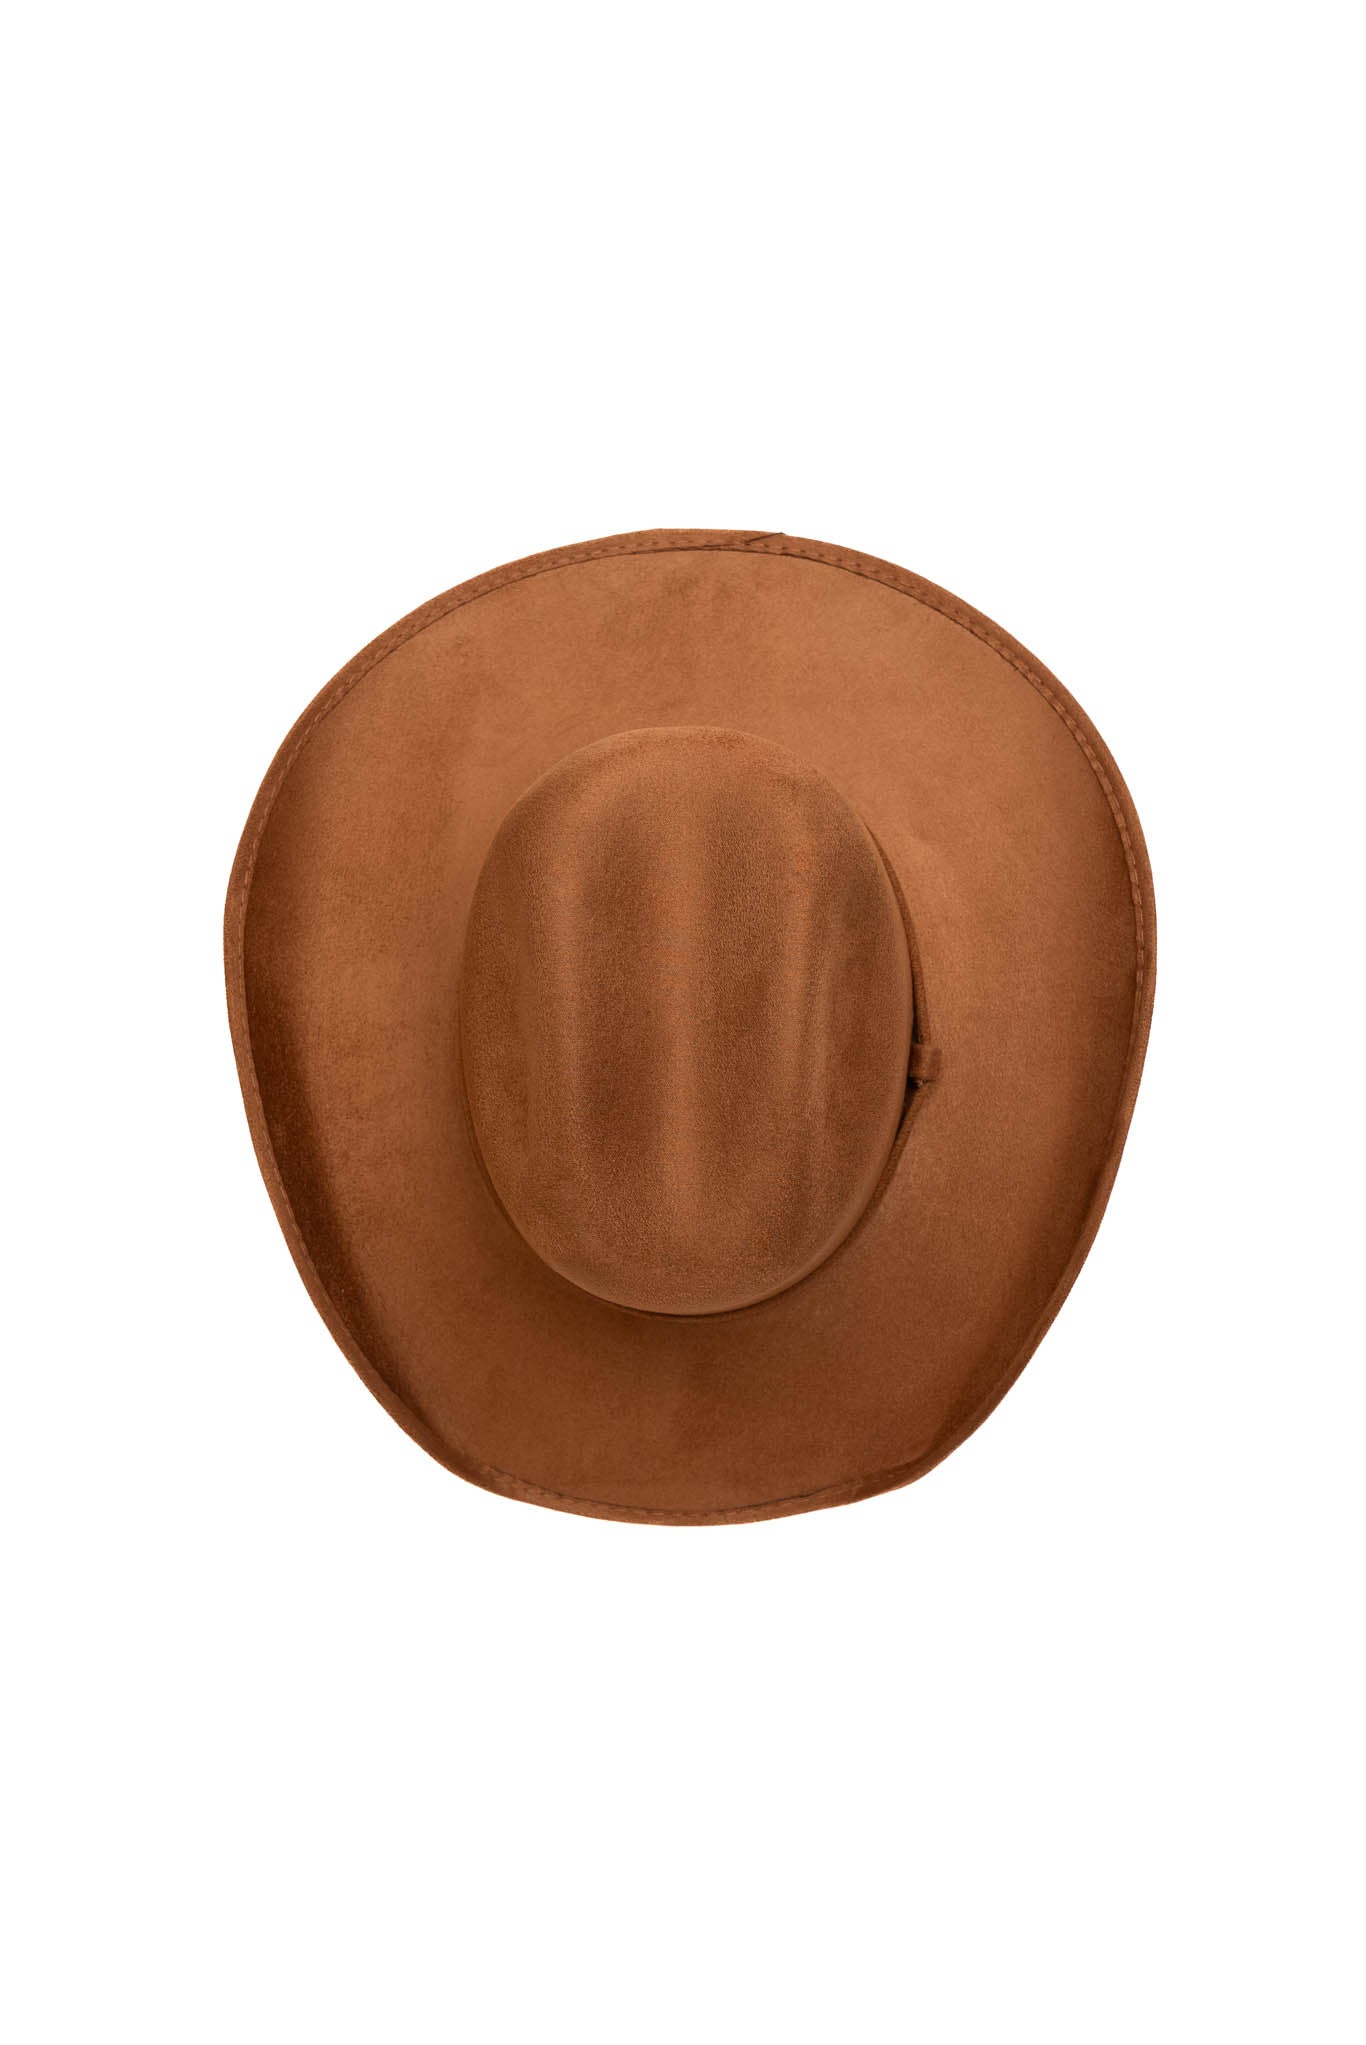 Little Damian Malboro Gamuza Cowboy Hat